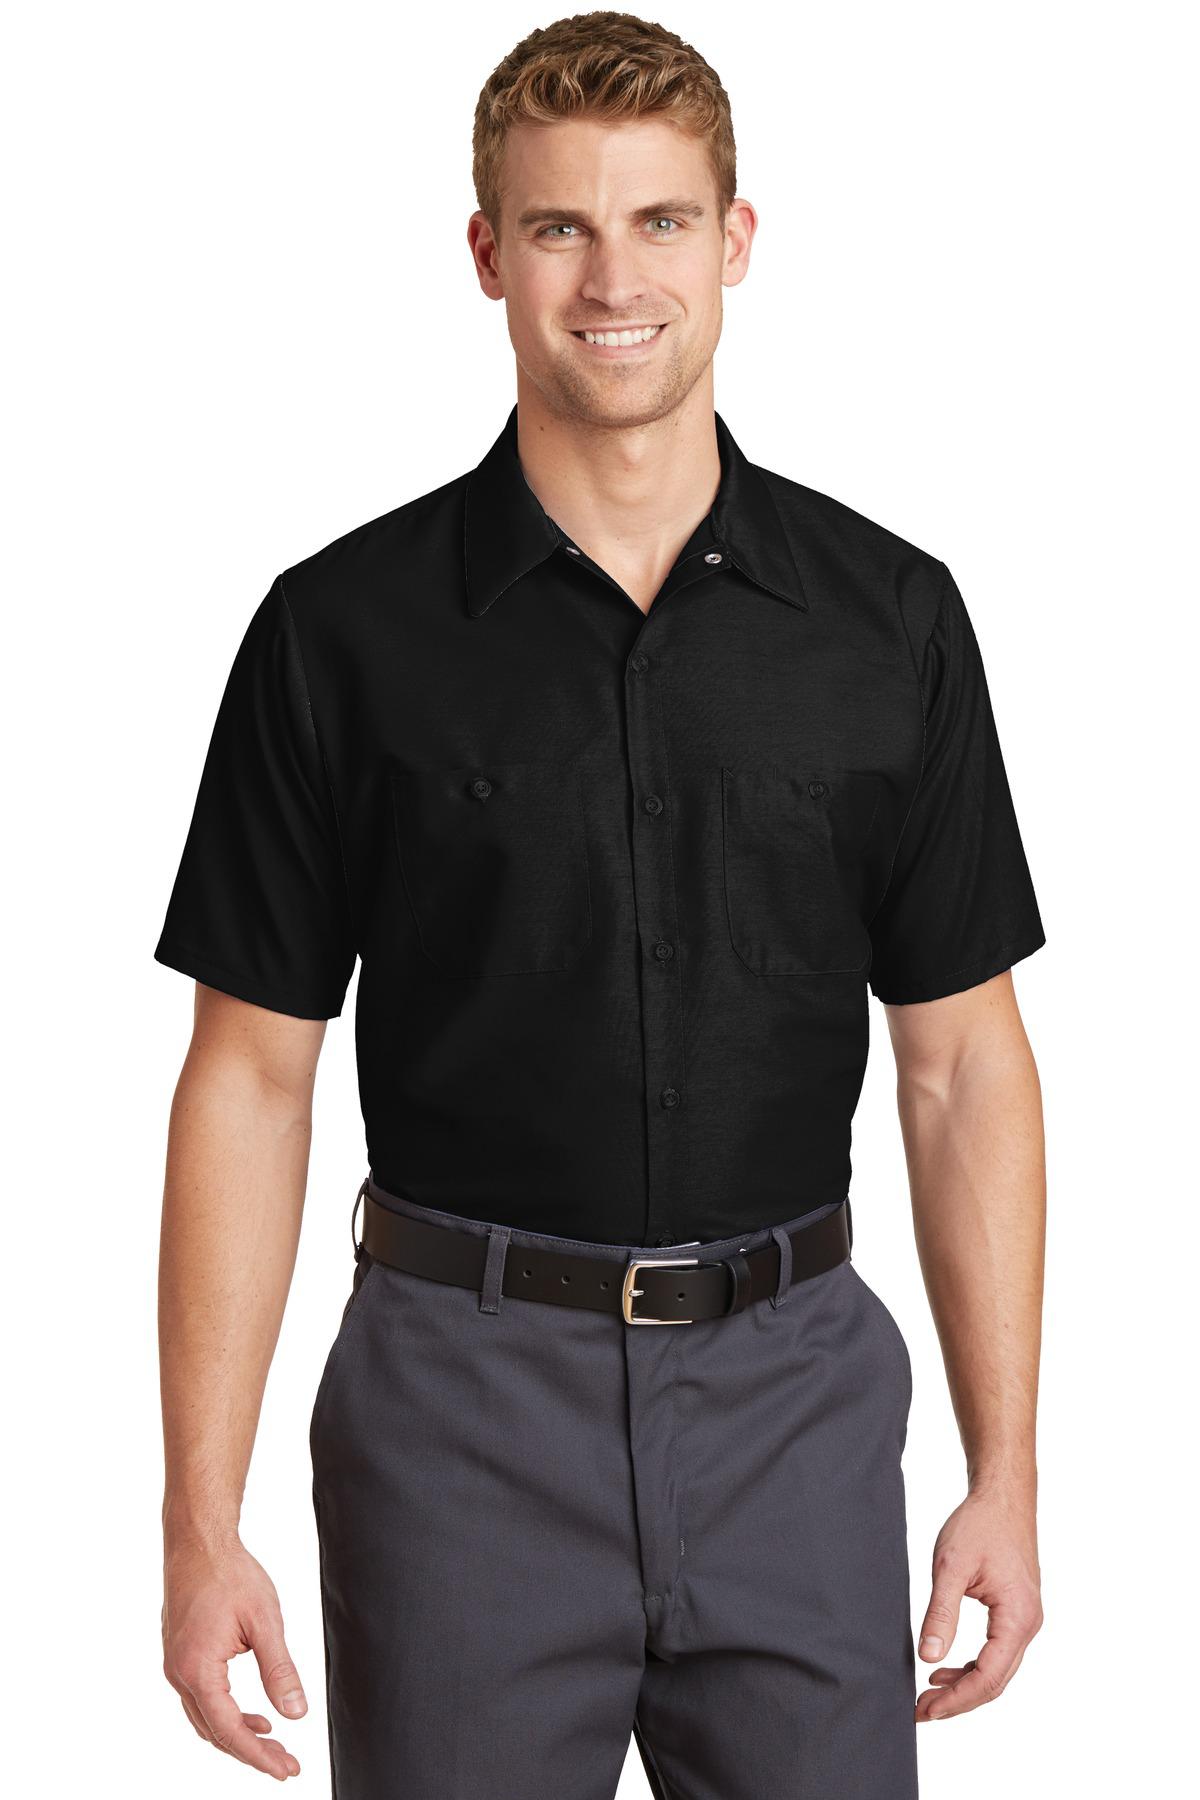 Red Kap SP24 Short Sleeve Industrial Work Shirt - Shirtmax